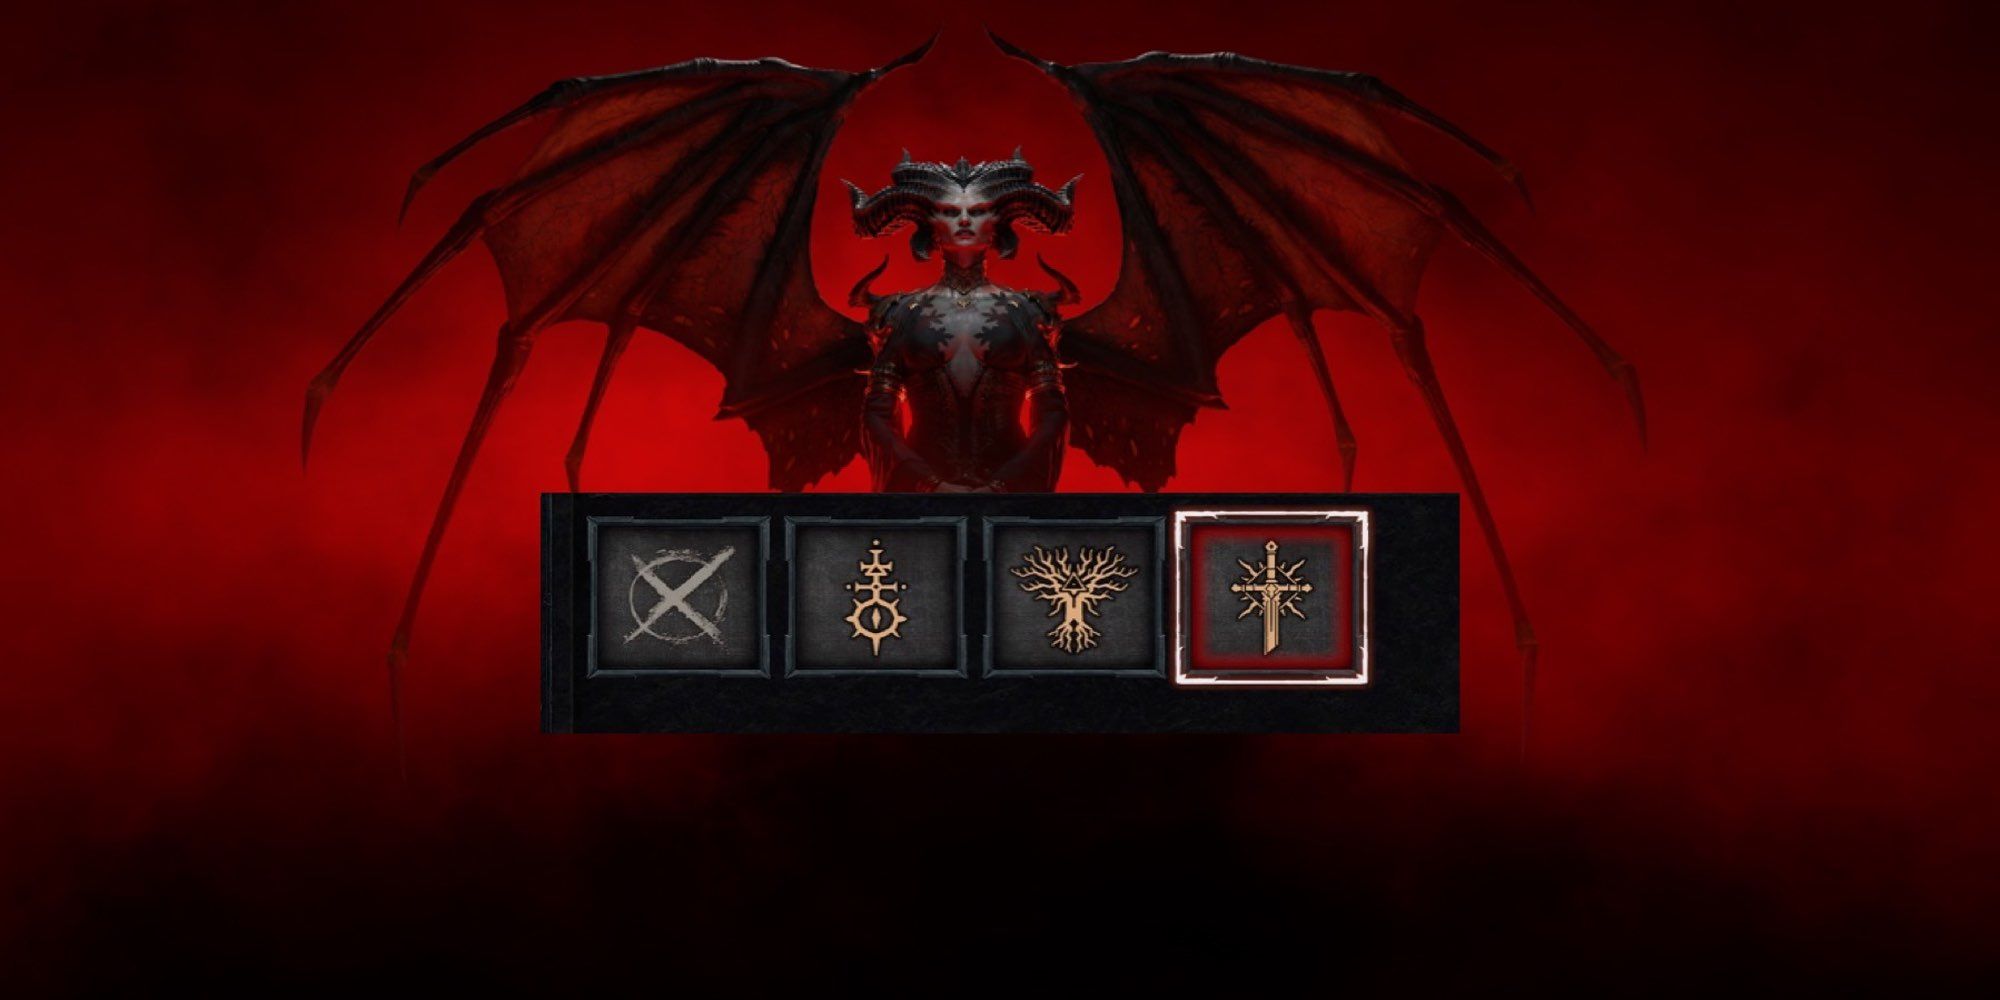 Diablo 4 через game pass